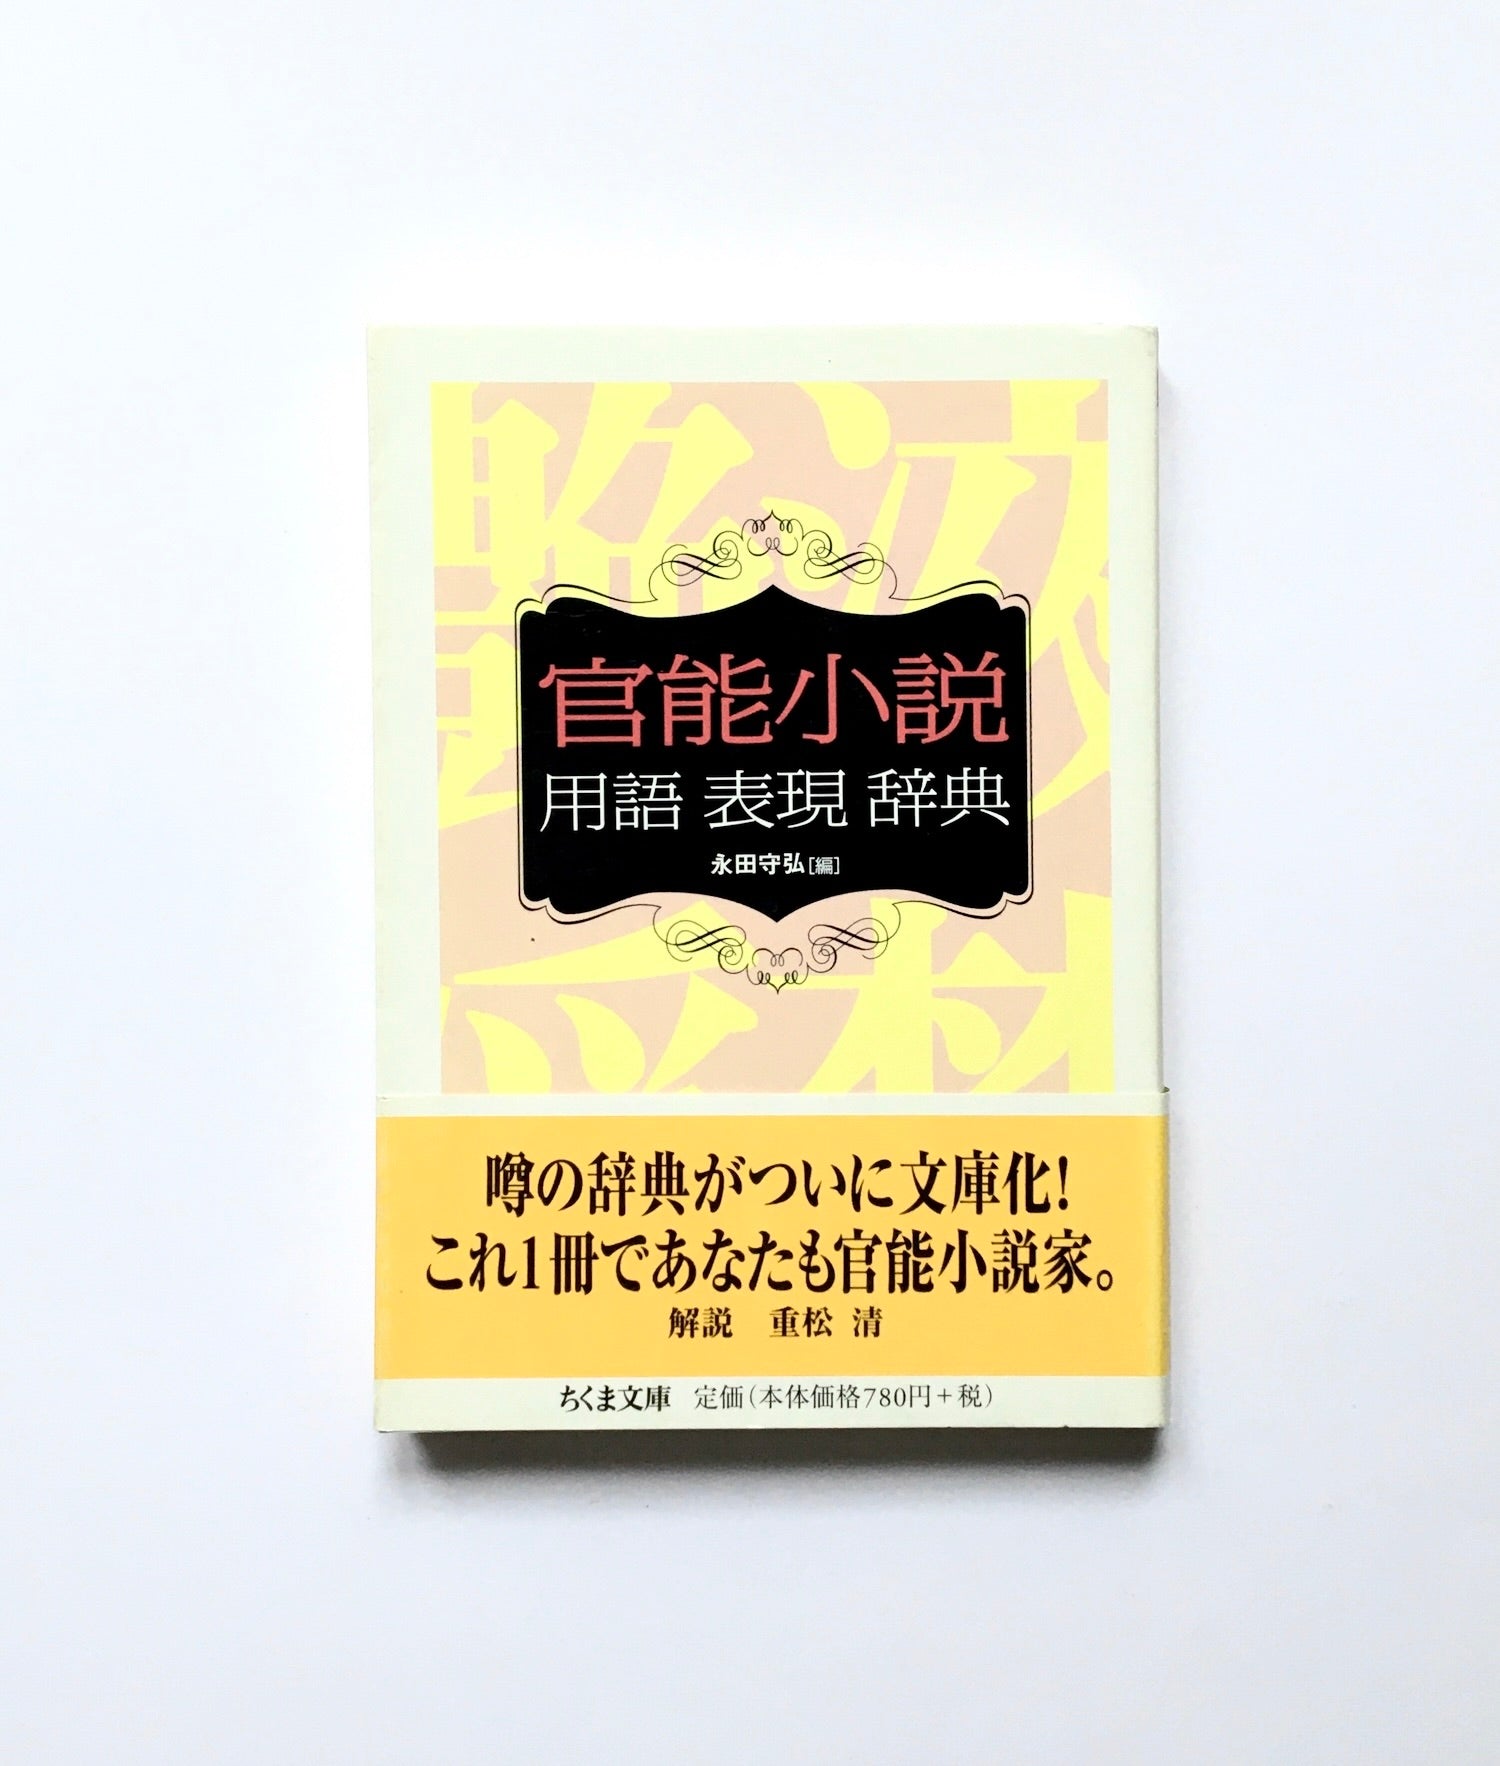 学習参考書・辞典 – Tsubaki japanese bookstore